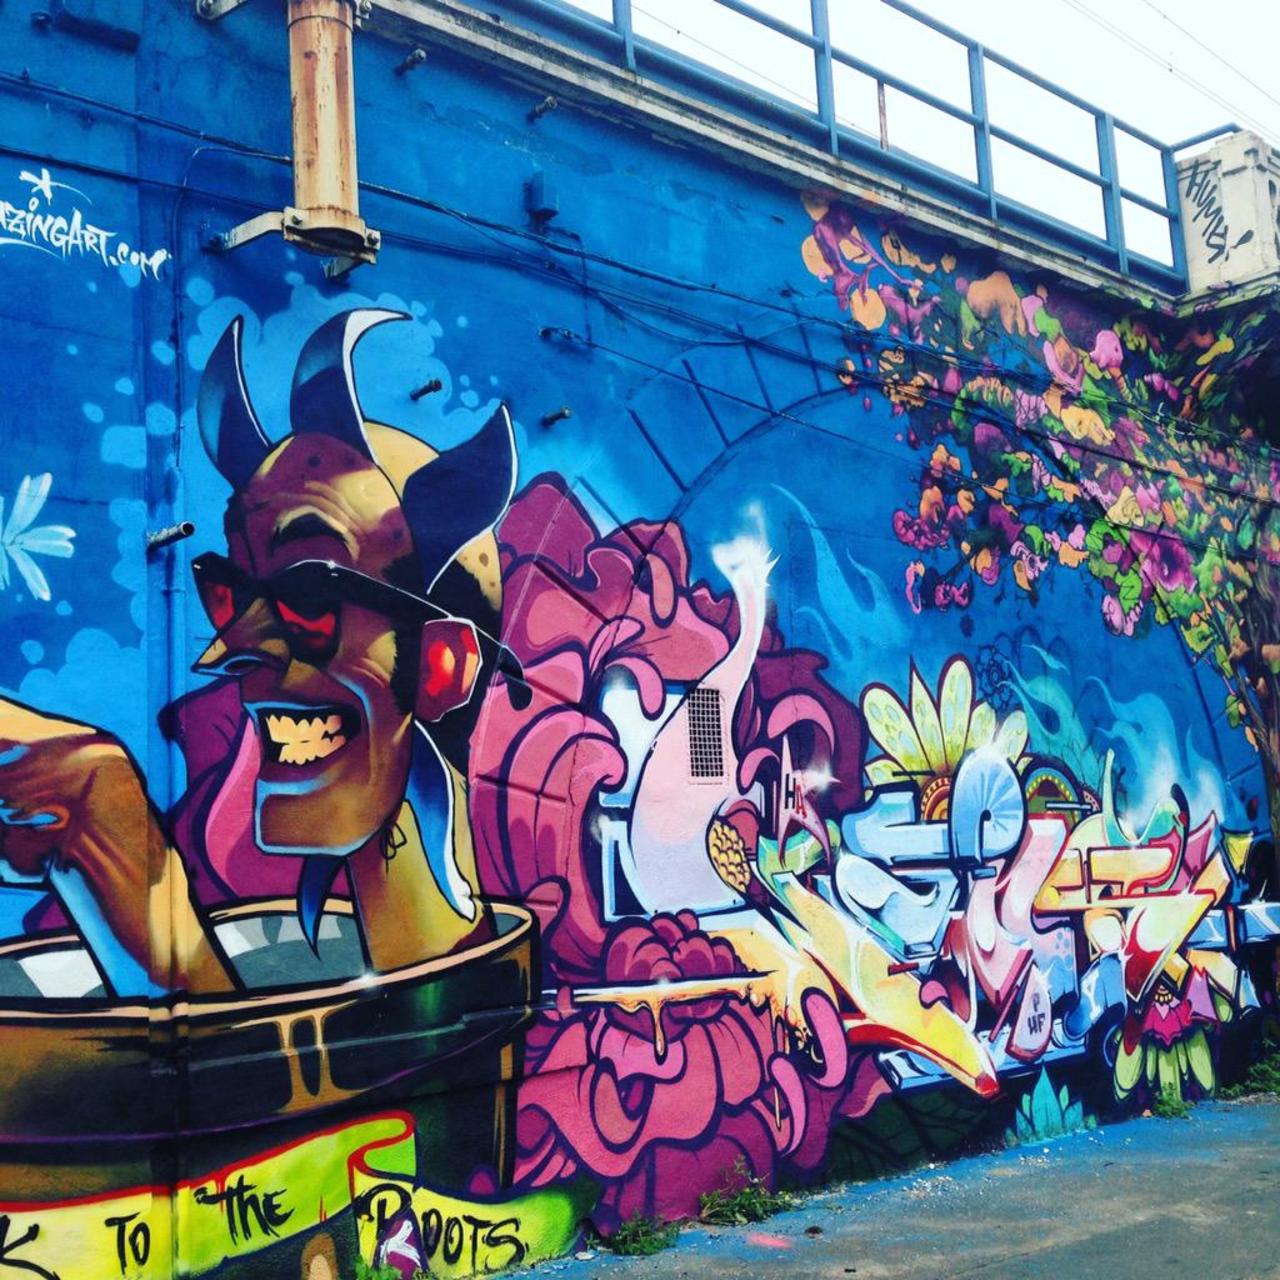 #streetart #milano #graffiti #graffitiart http://t.co/YnpCkDSqfp